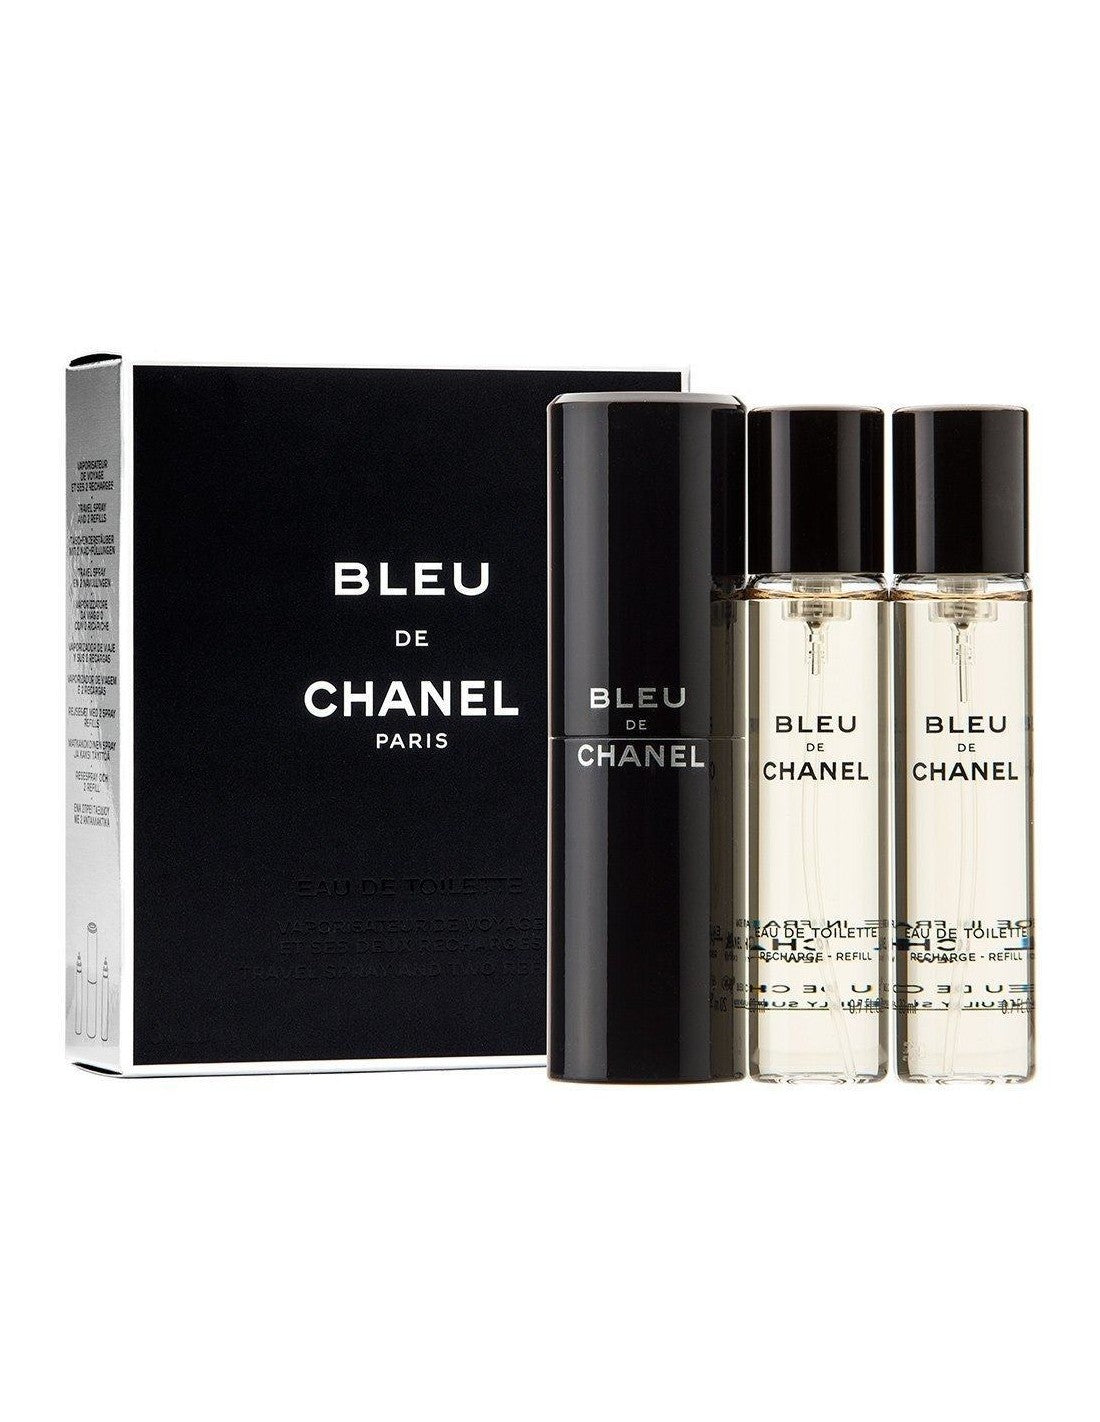 chanel perfume mini gift set